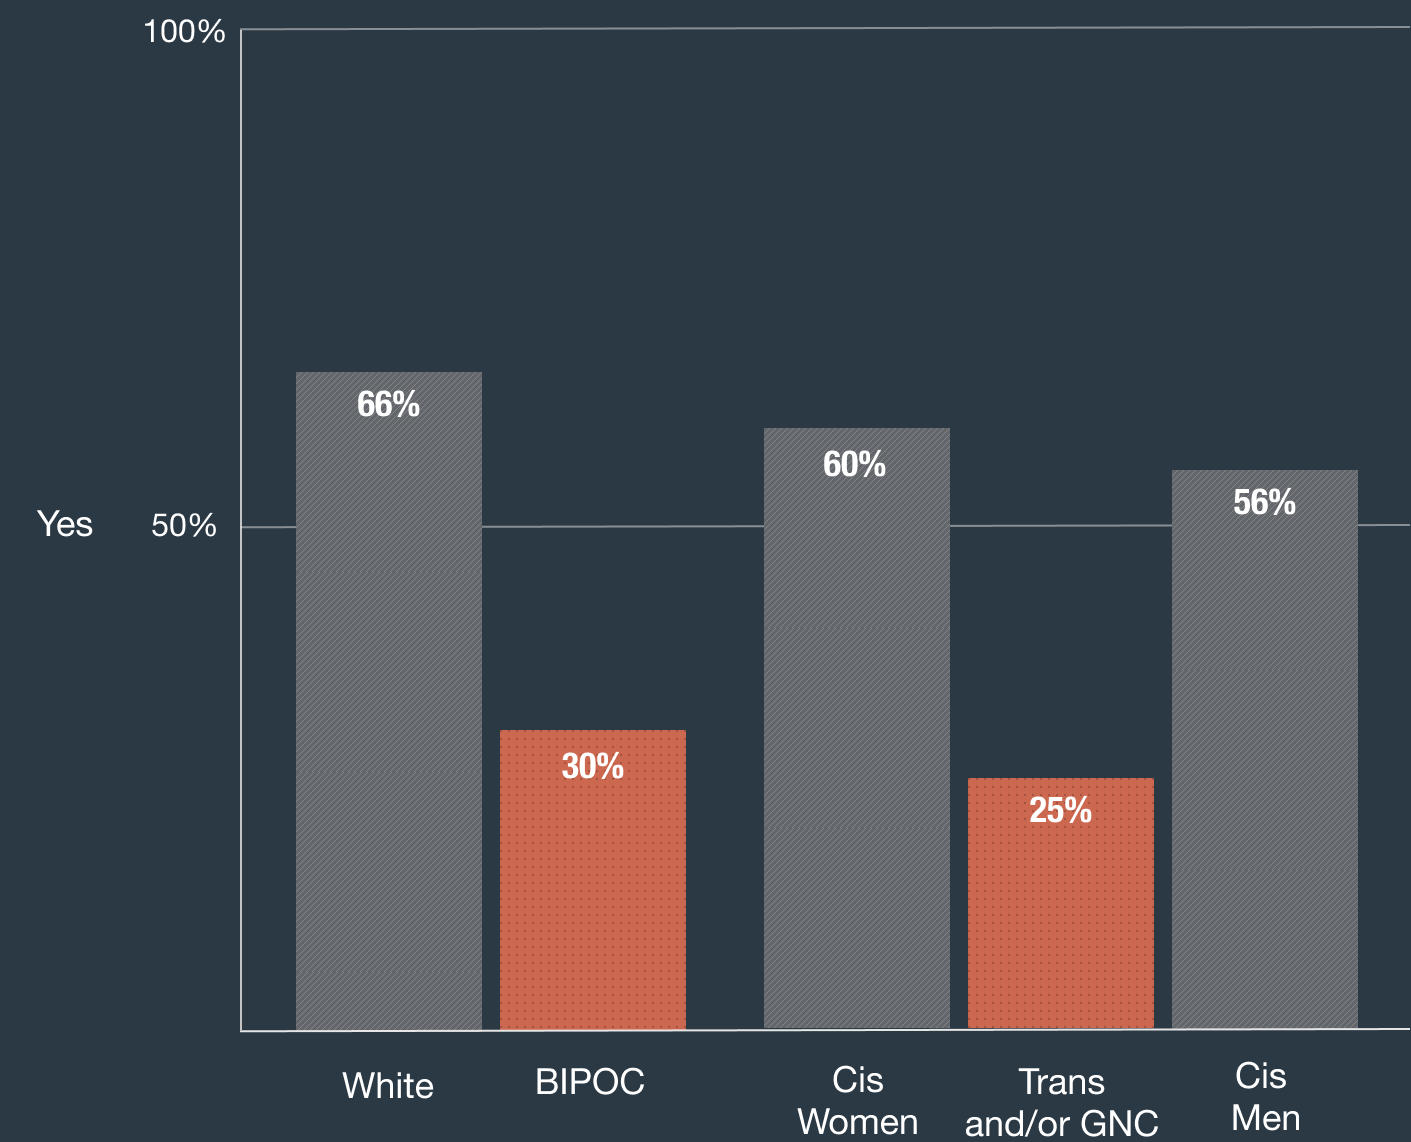 White: 66%, BIPOC: 30%, Cis Women: 60%, Trans and/or GNC: 25%, Cis Men: 56%